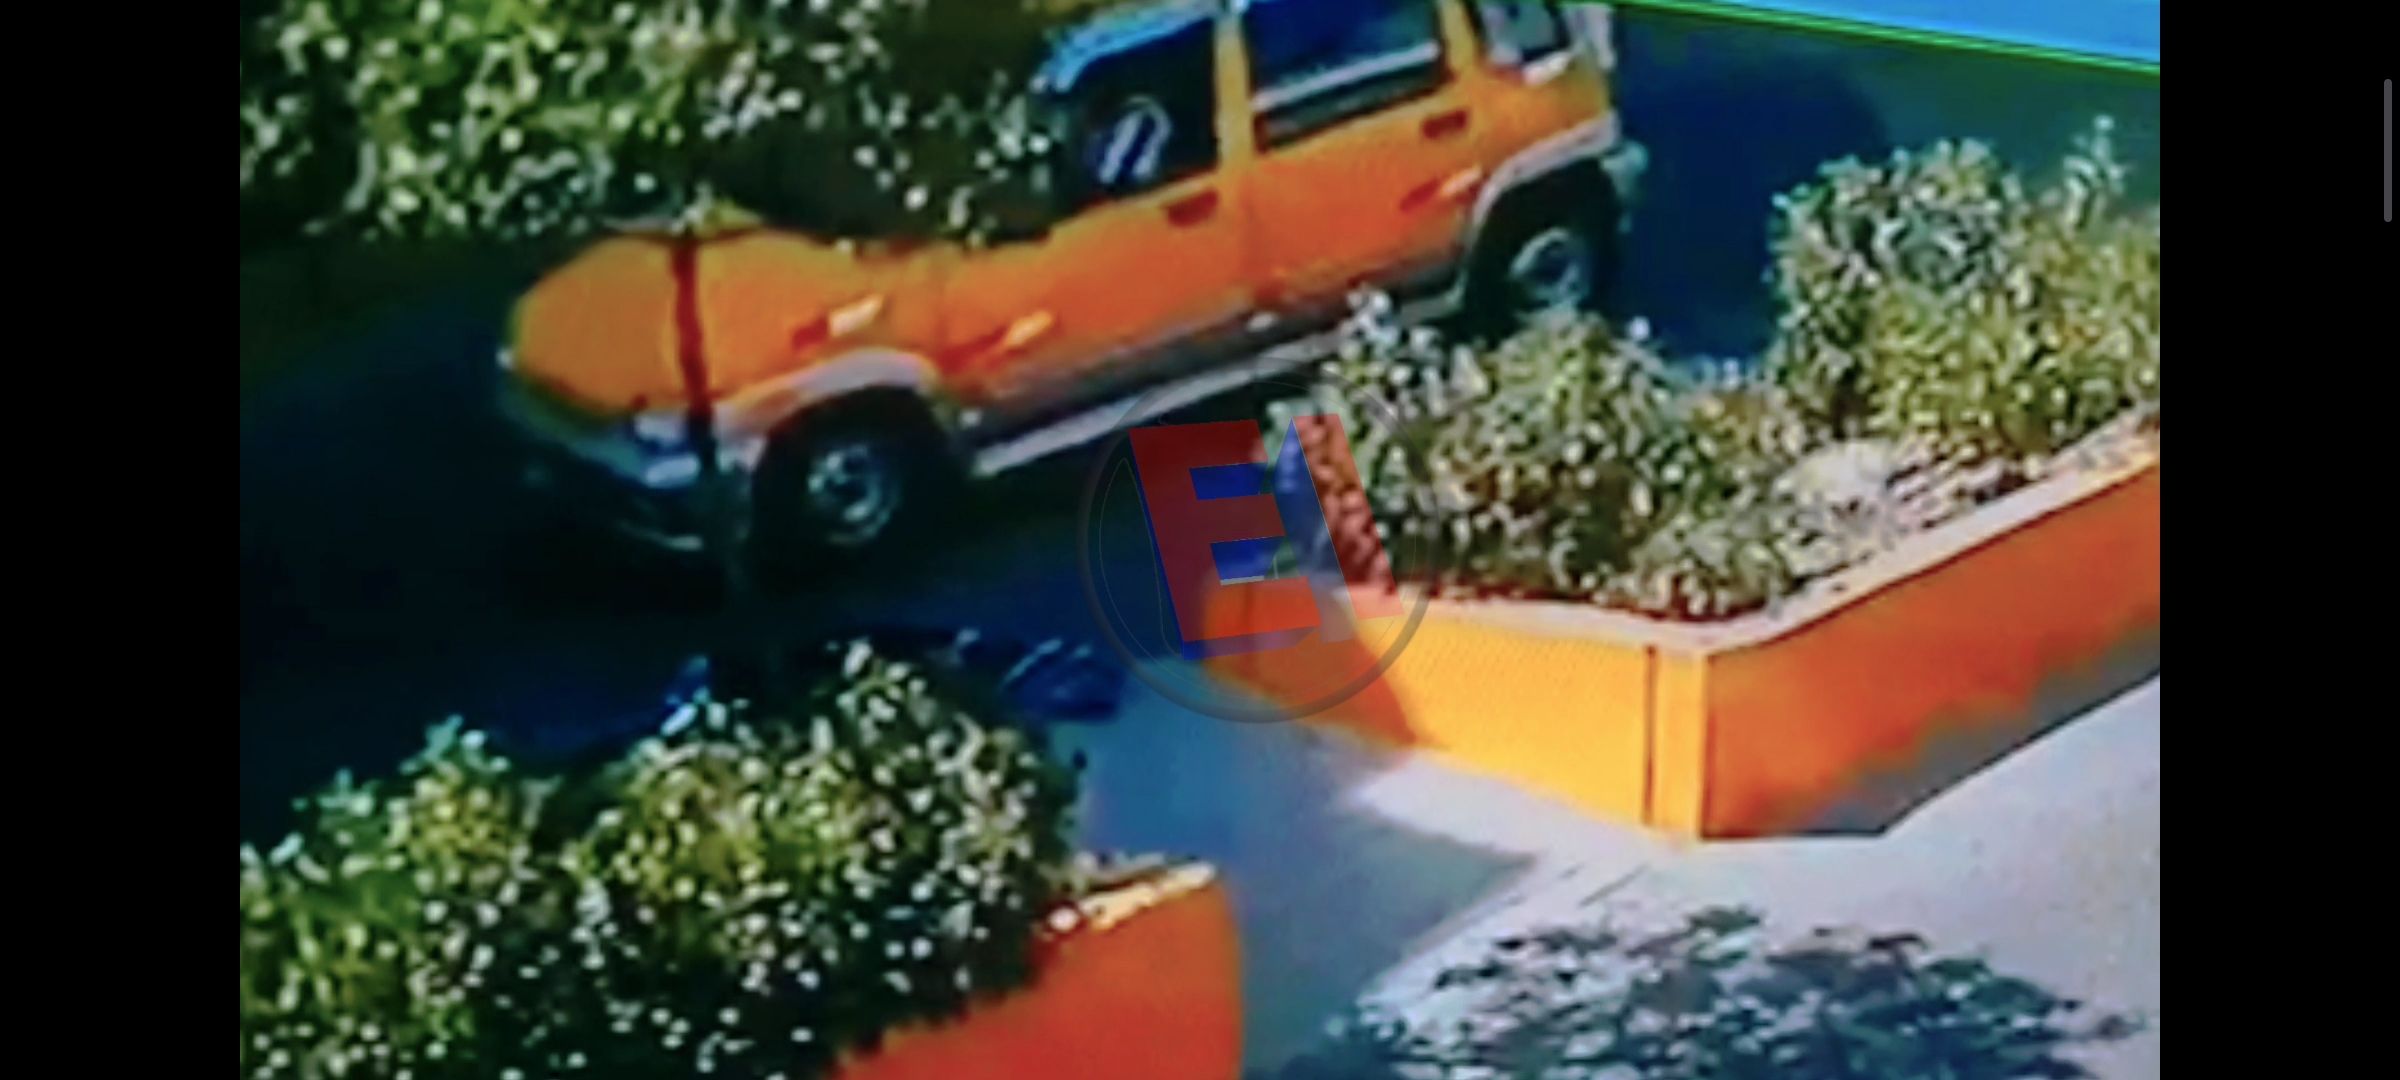 VIDEO. Se busca a taxista que atropelló a abuelito y se dio a la fuga